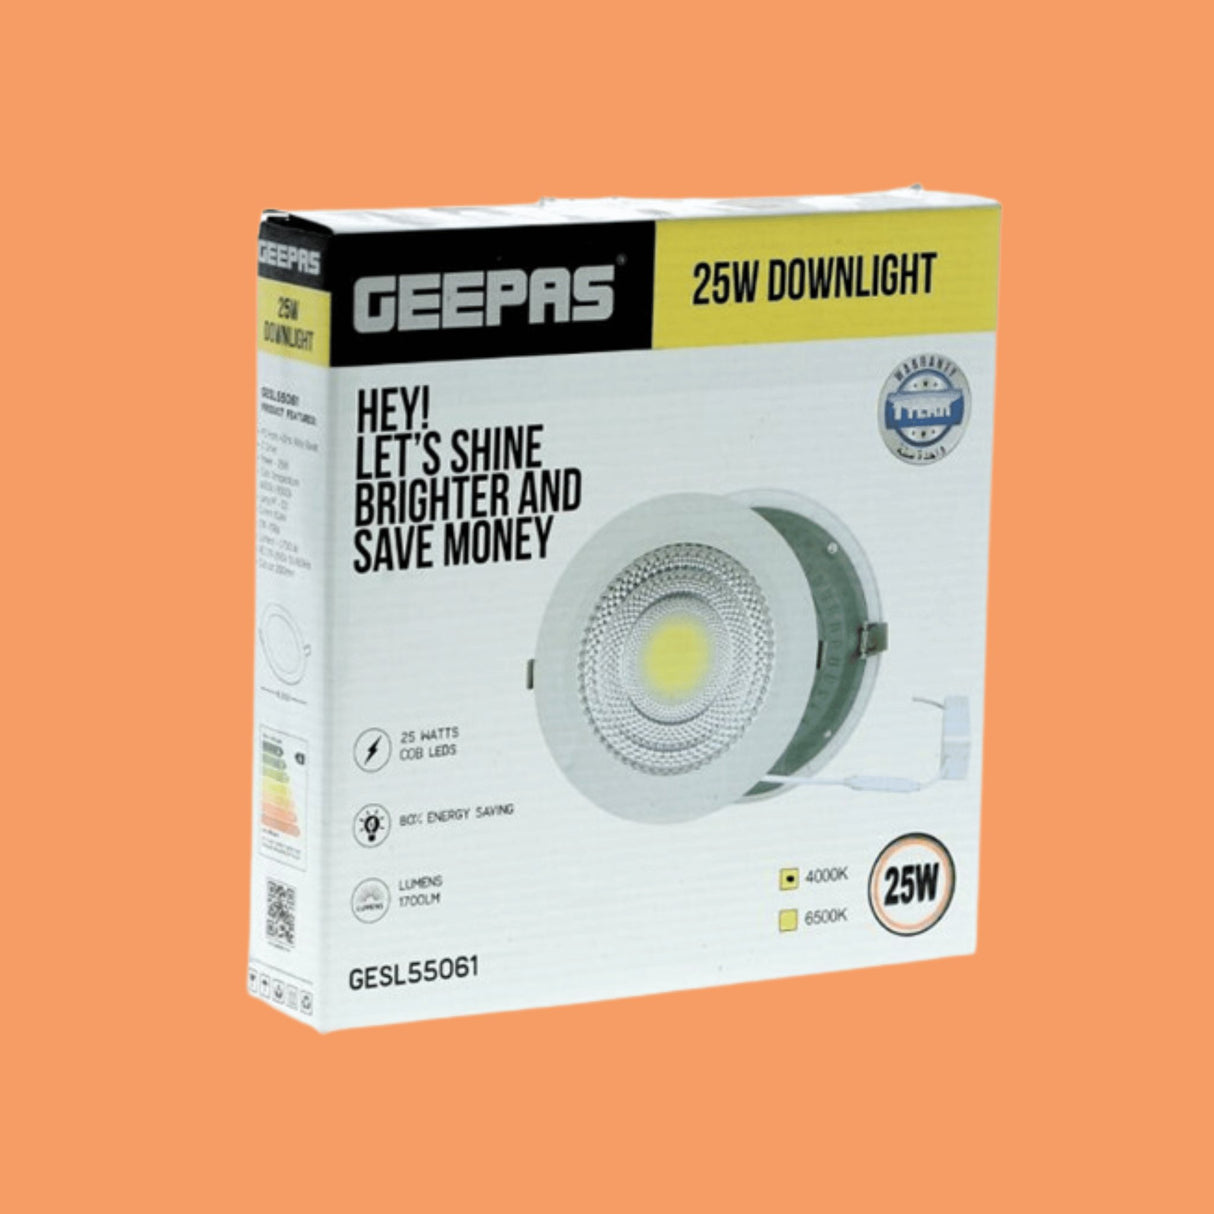 Geepas GESL55061 Round Slim Downlight Led 25W Ceiling Light - KWT Tech Mart